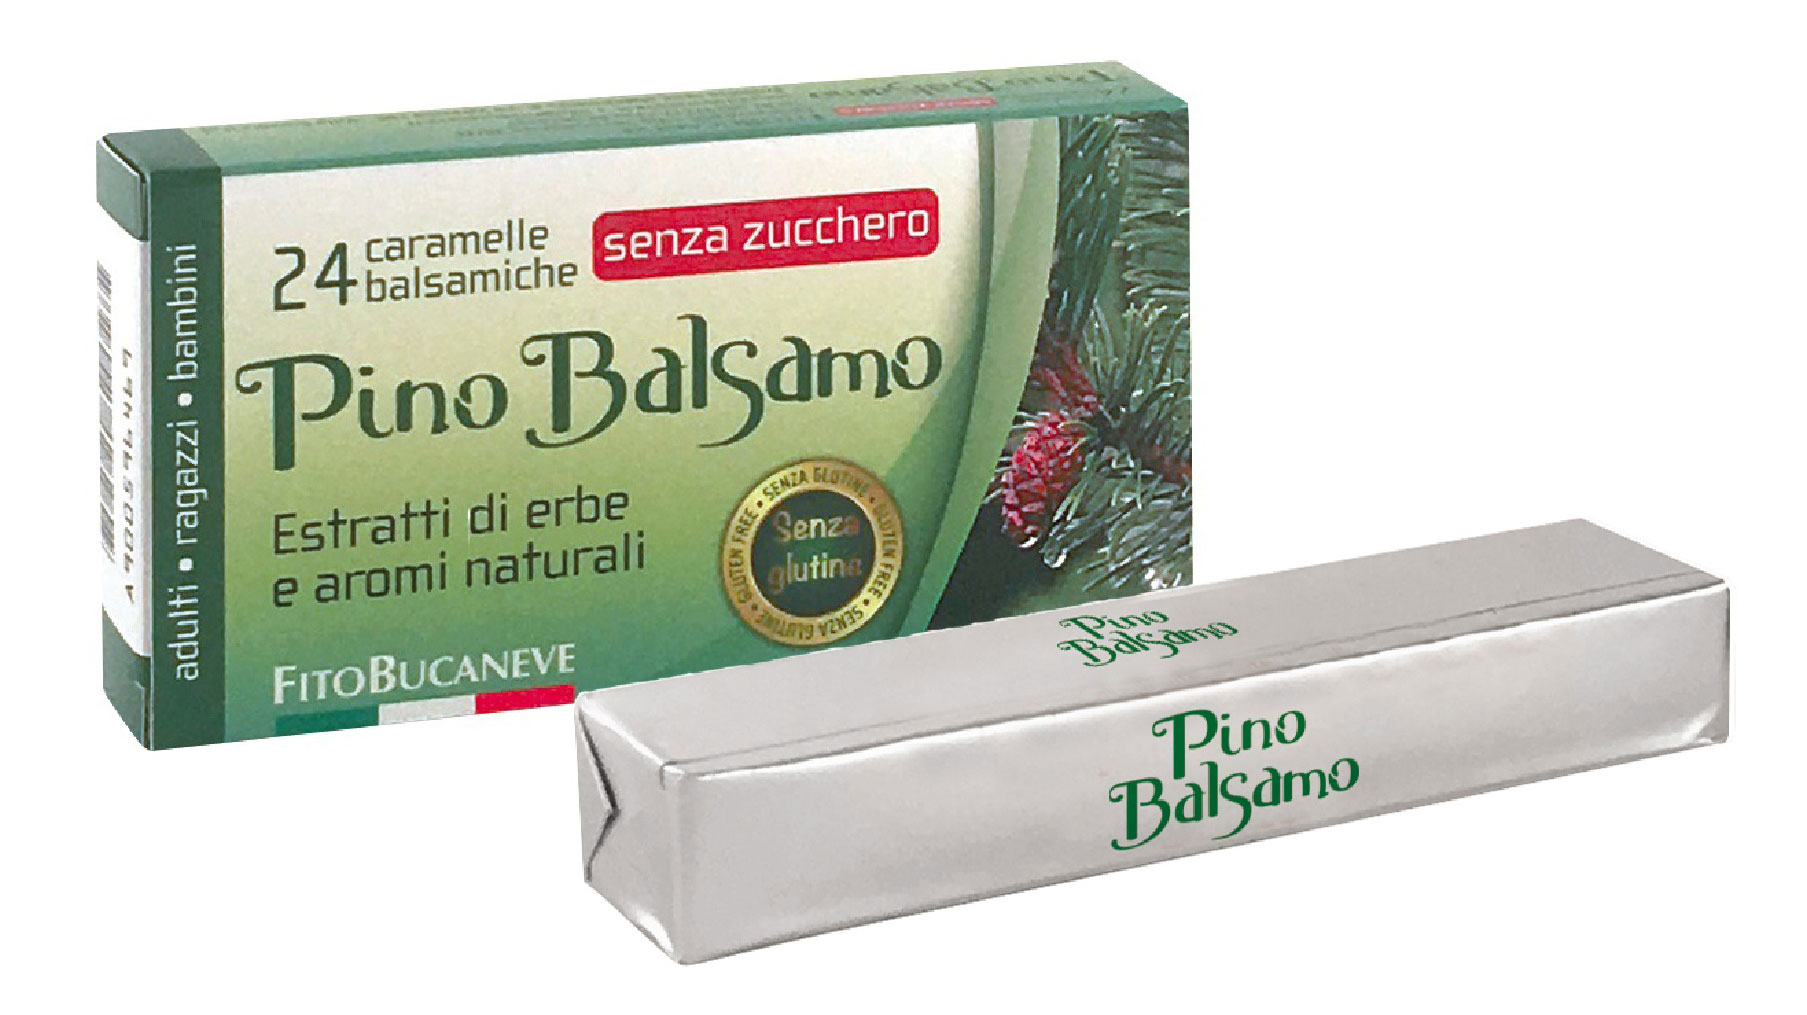 Image of Fitobucaneve Pino Balsamo Caramelle Balsamiche con Aspartame Senza Glutine 24Caramelle